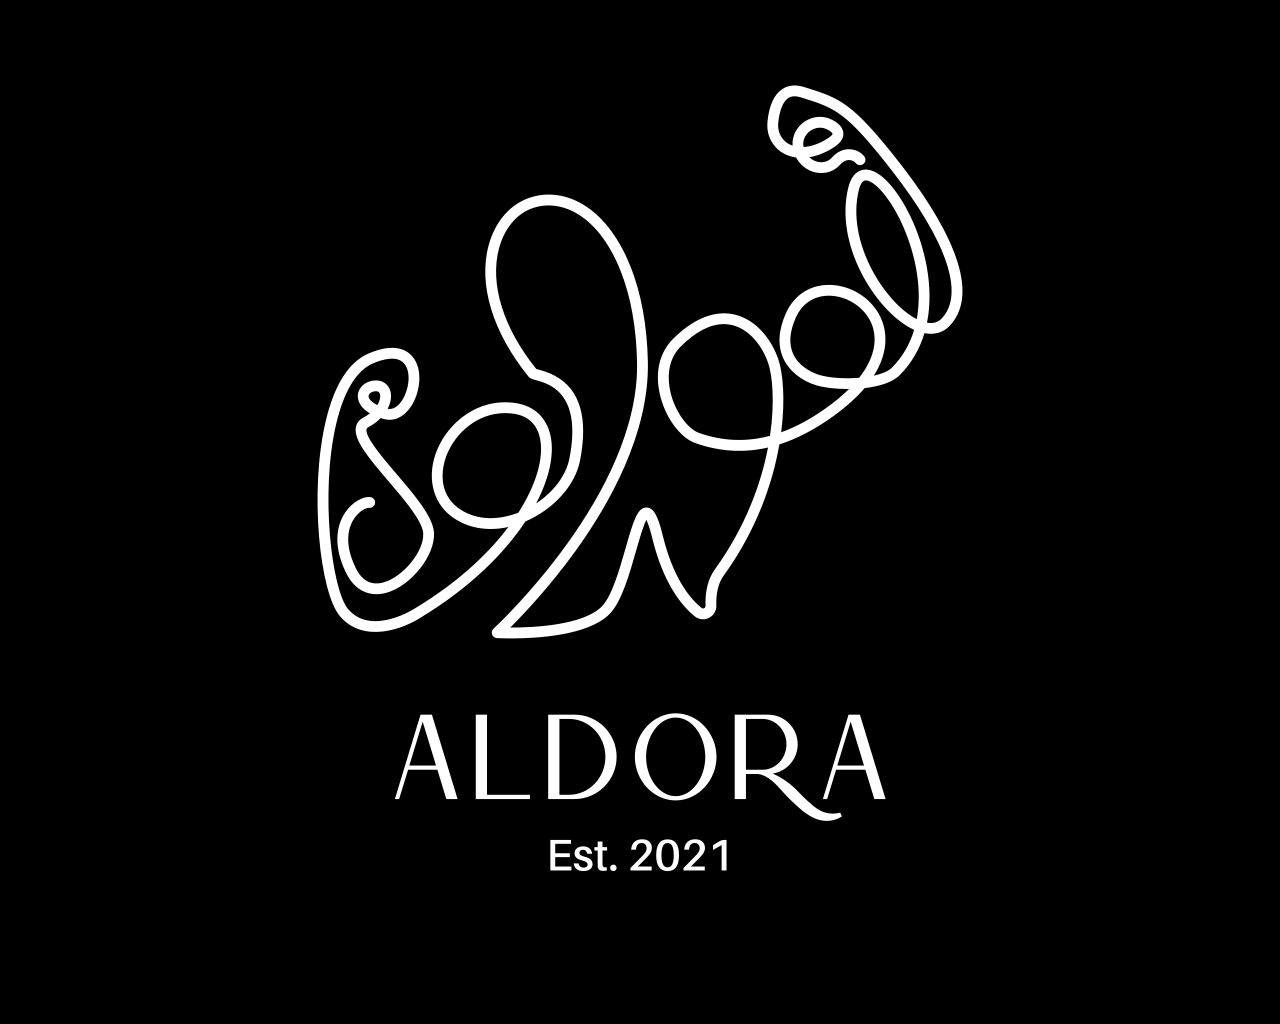 ALDORA's web page